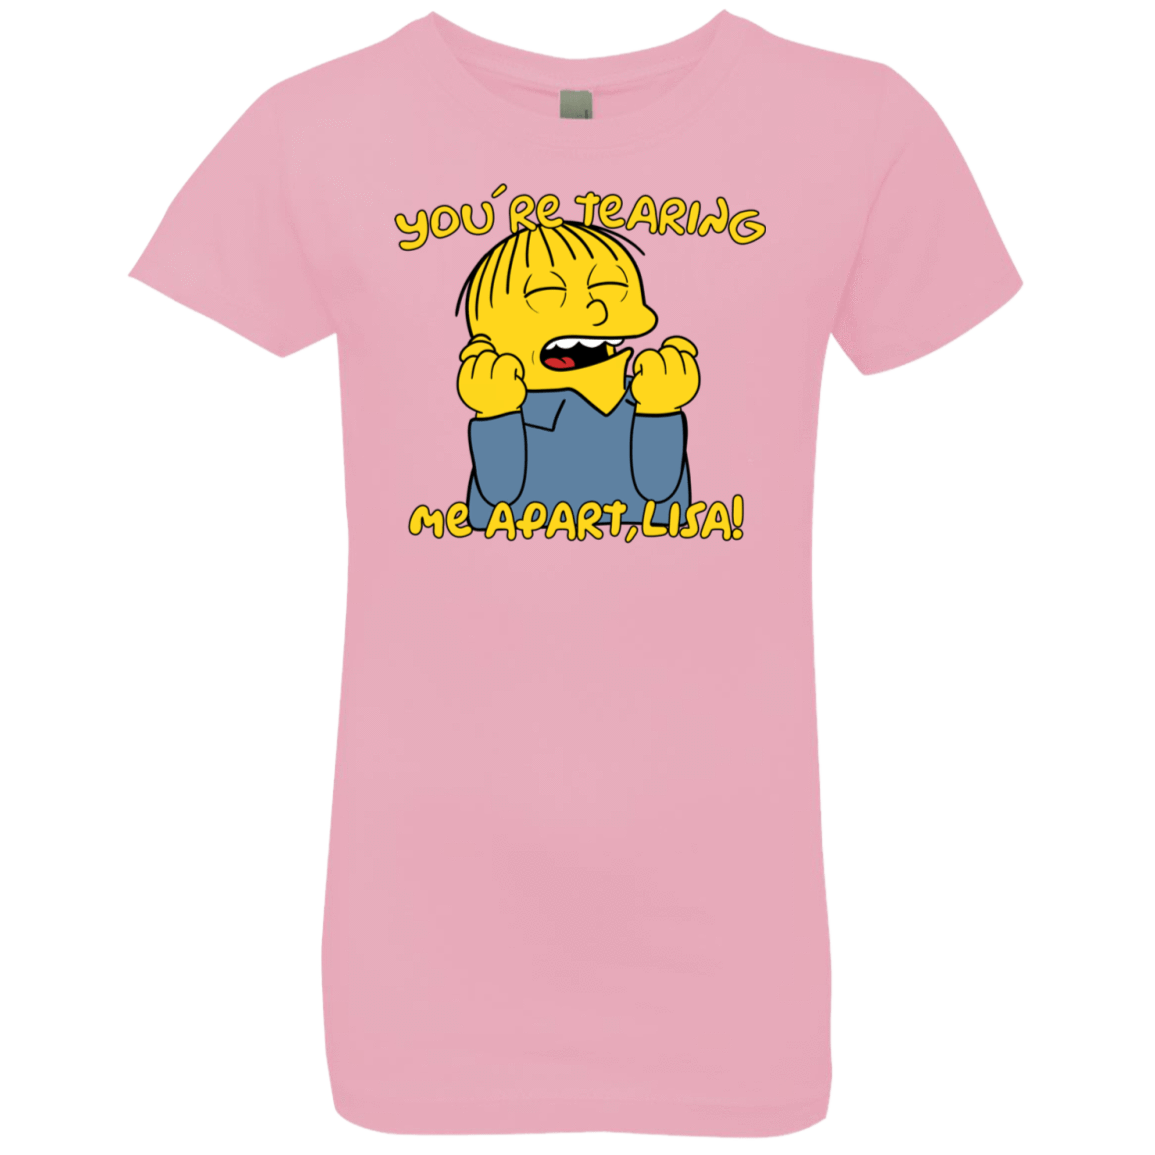 T-Shirts Light Pink / YXS Ralph Wiseau Girls Premium T-Shirt